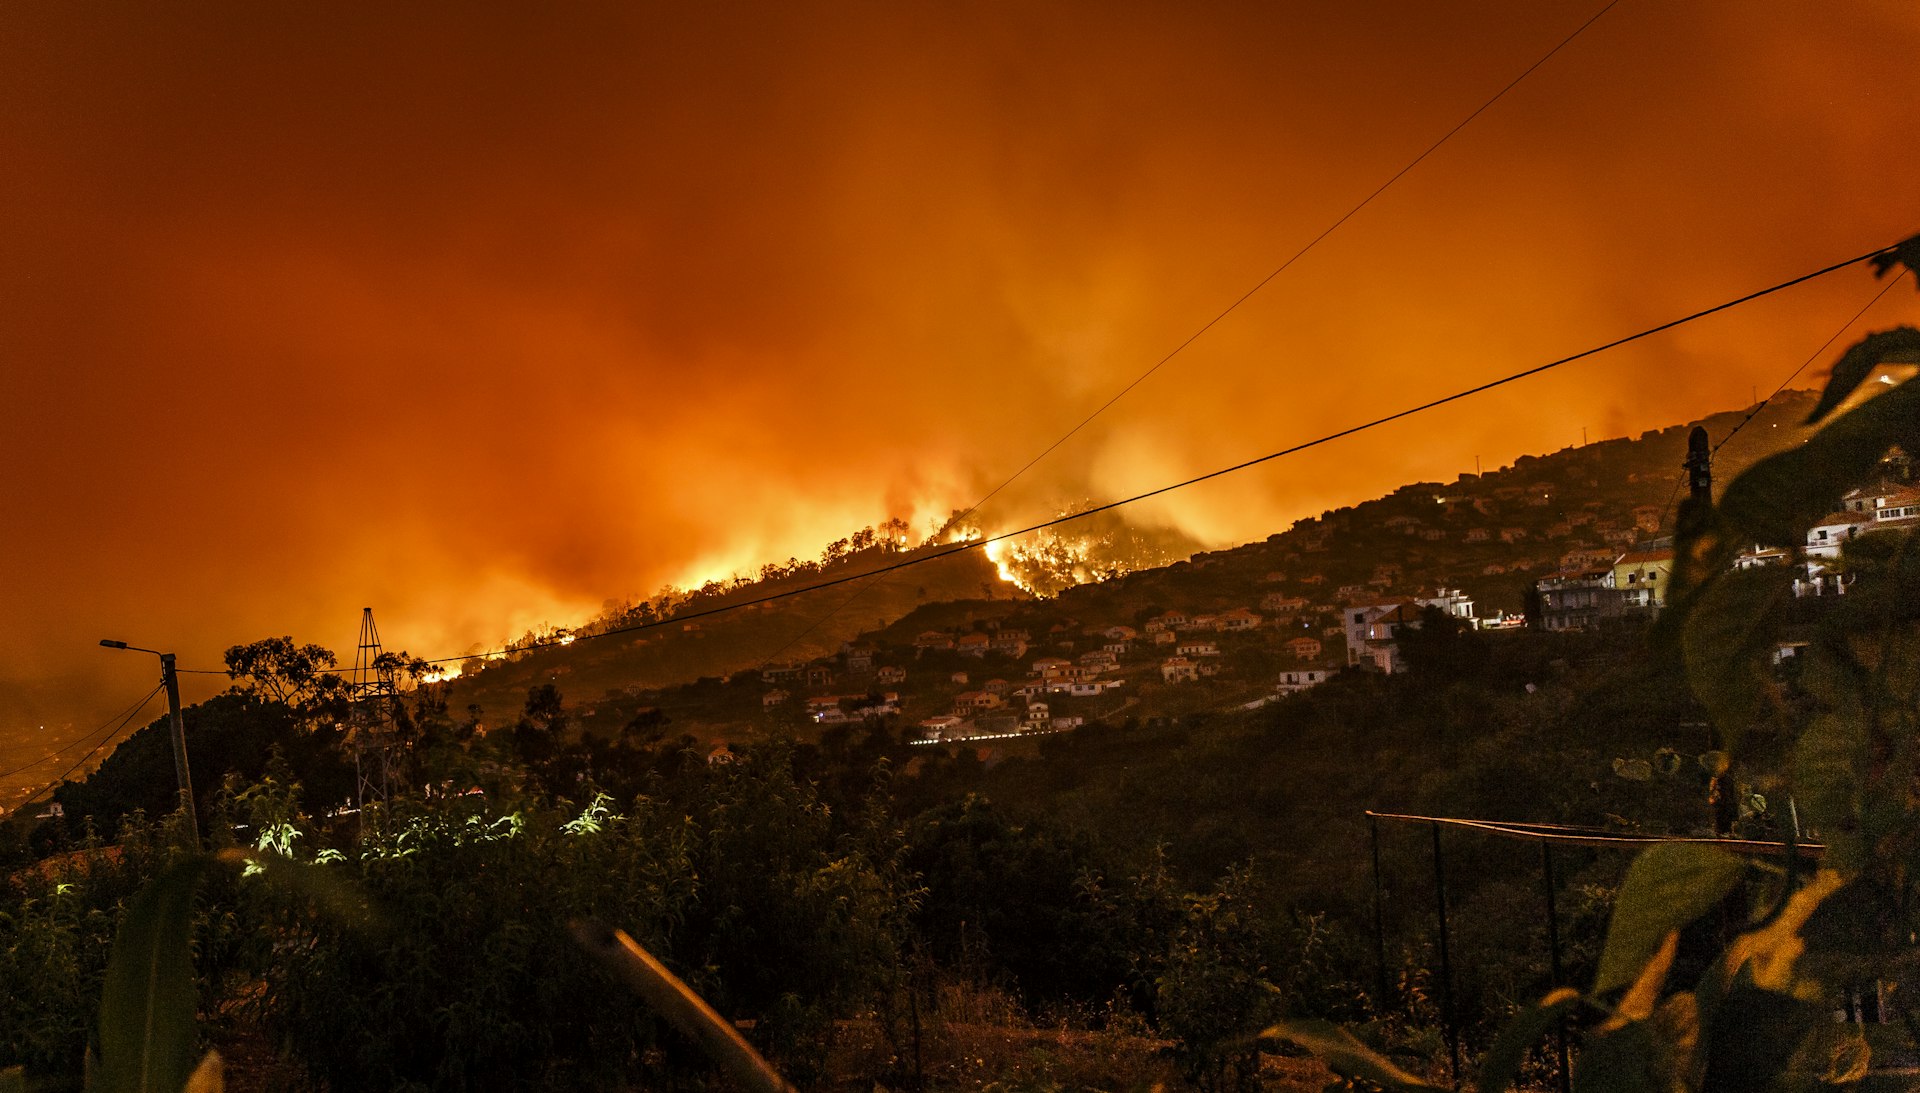 Forest fire raging through a hillside village